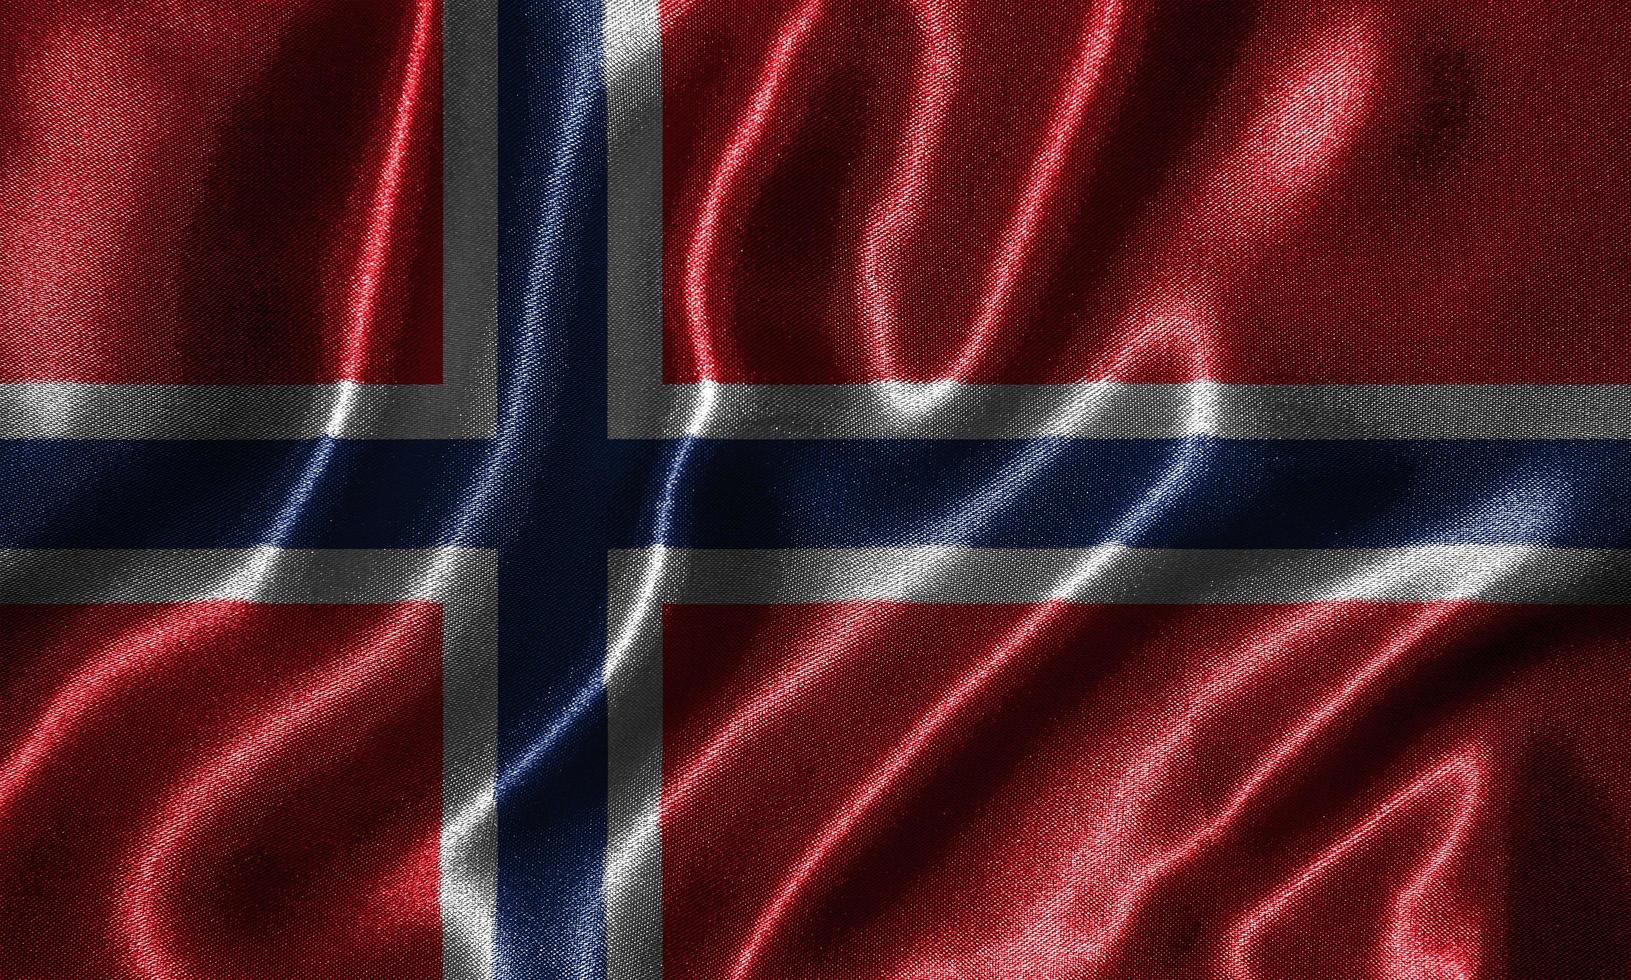 papel de parede pela bandeira da Noruega e acenando a bandeira por tecido. foto